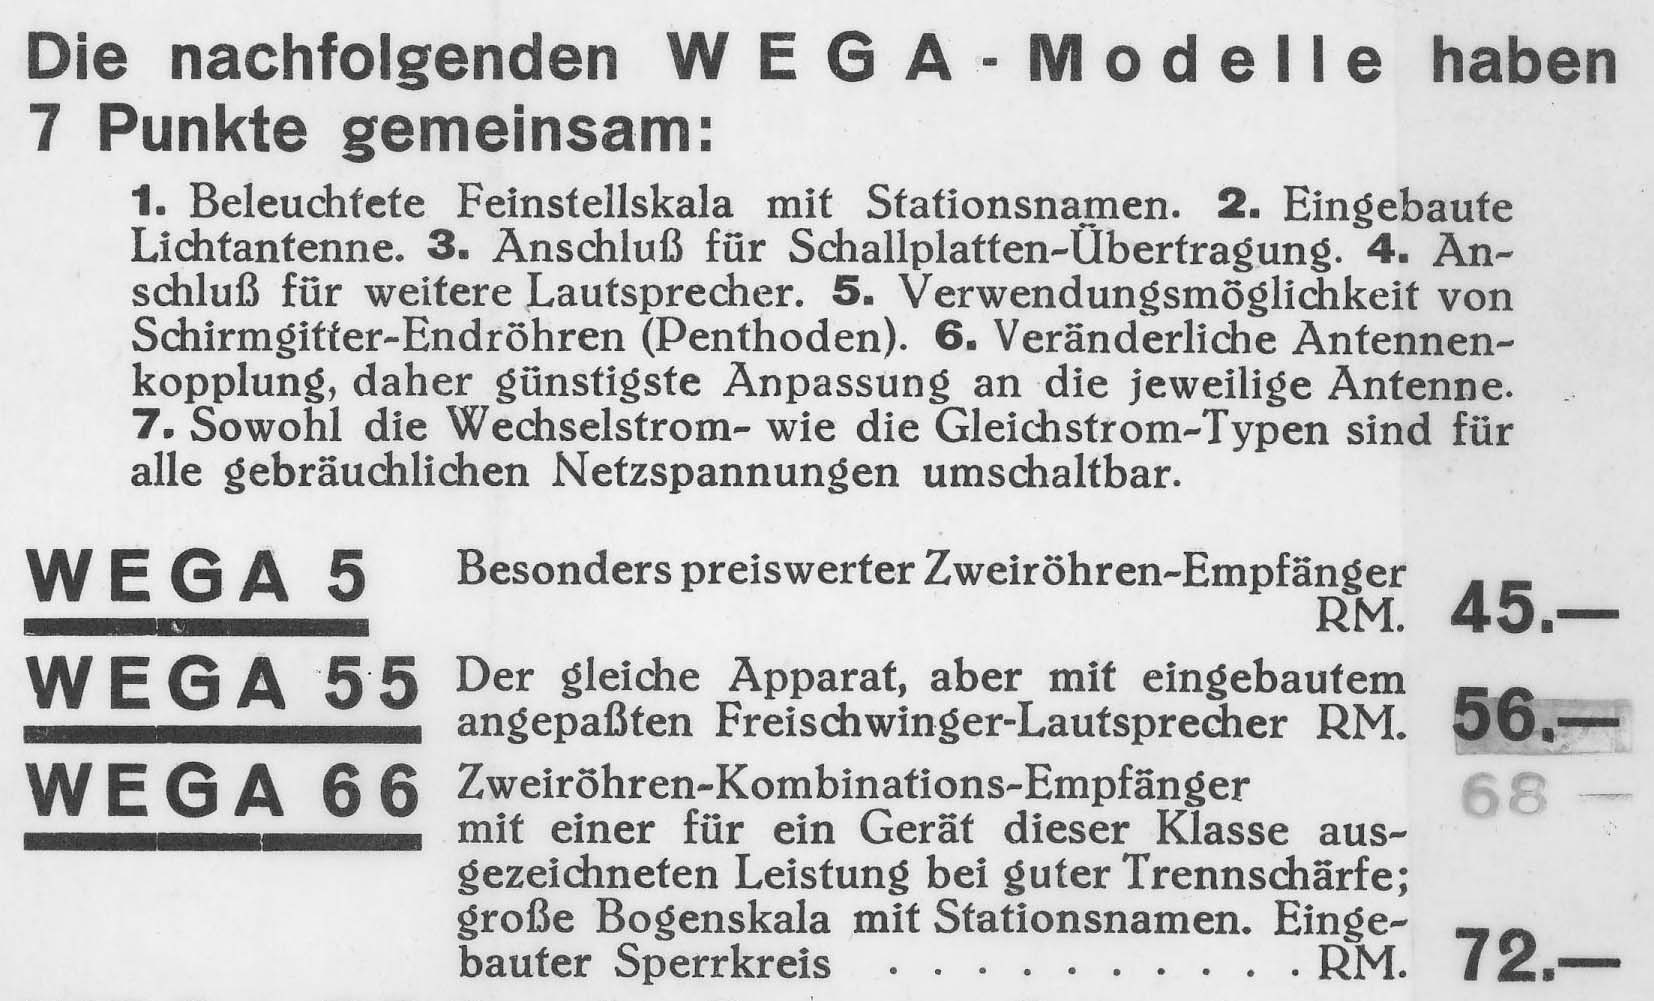 radiotechnik WEGA Modelle WEGA 5, WEGA 55, WEGA 66